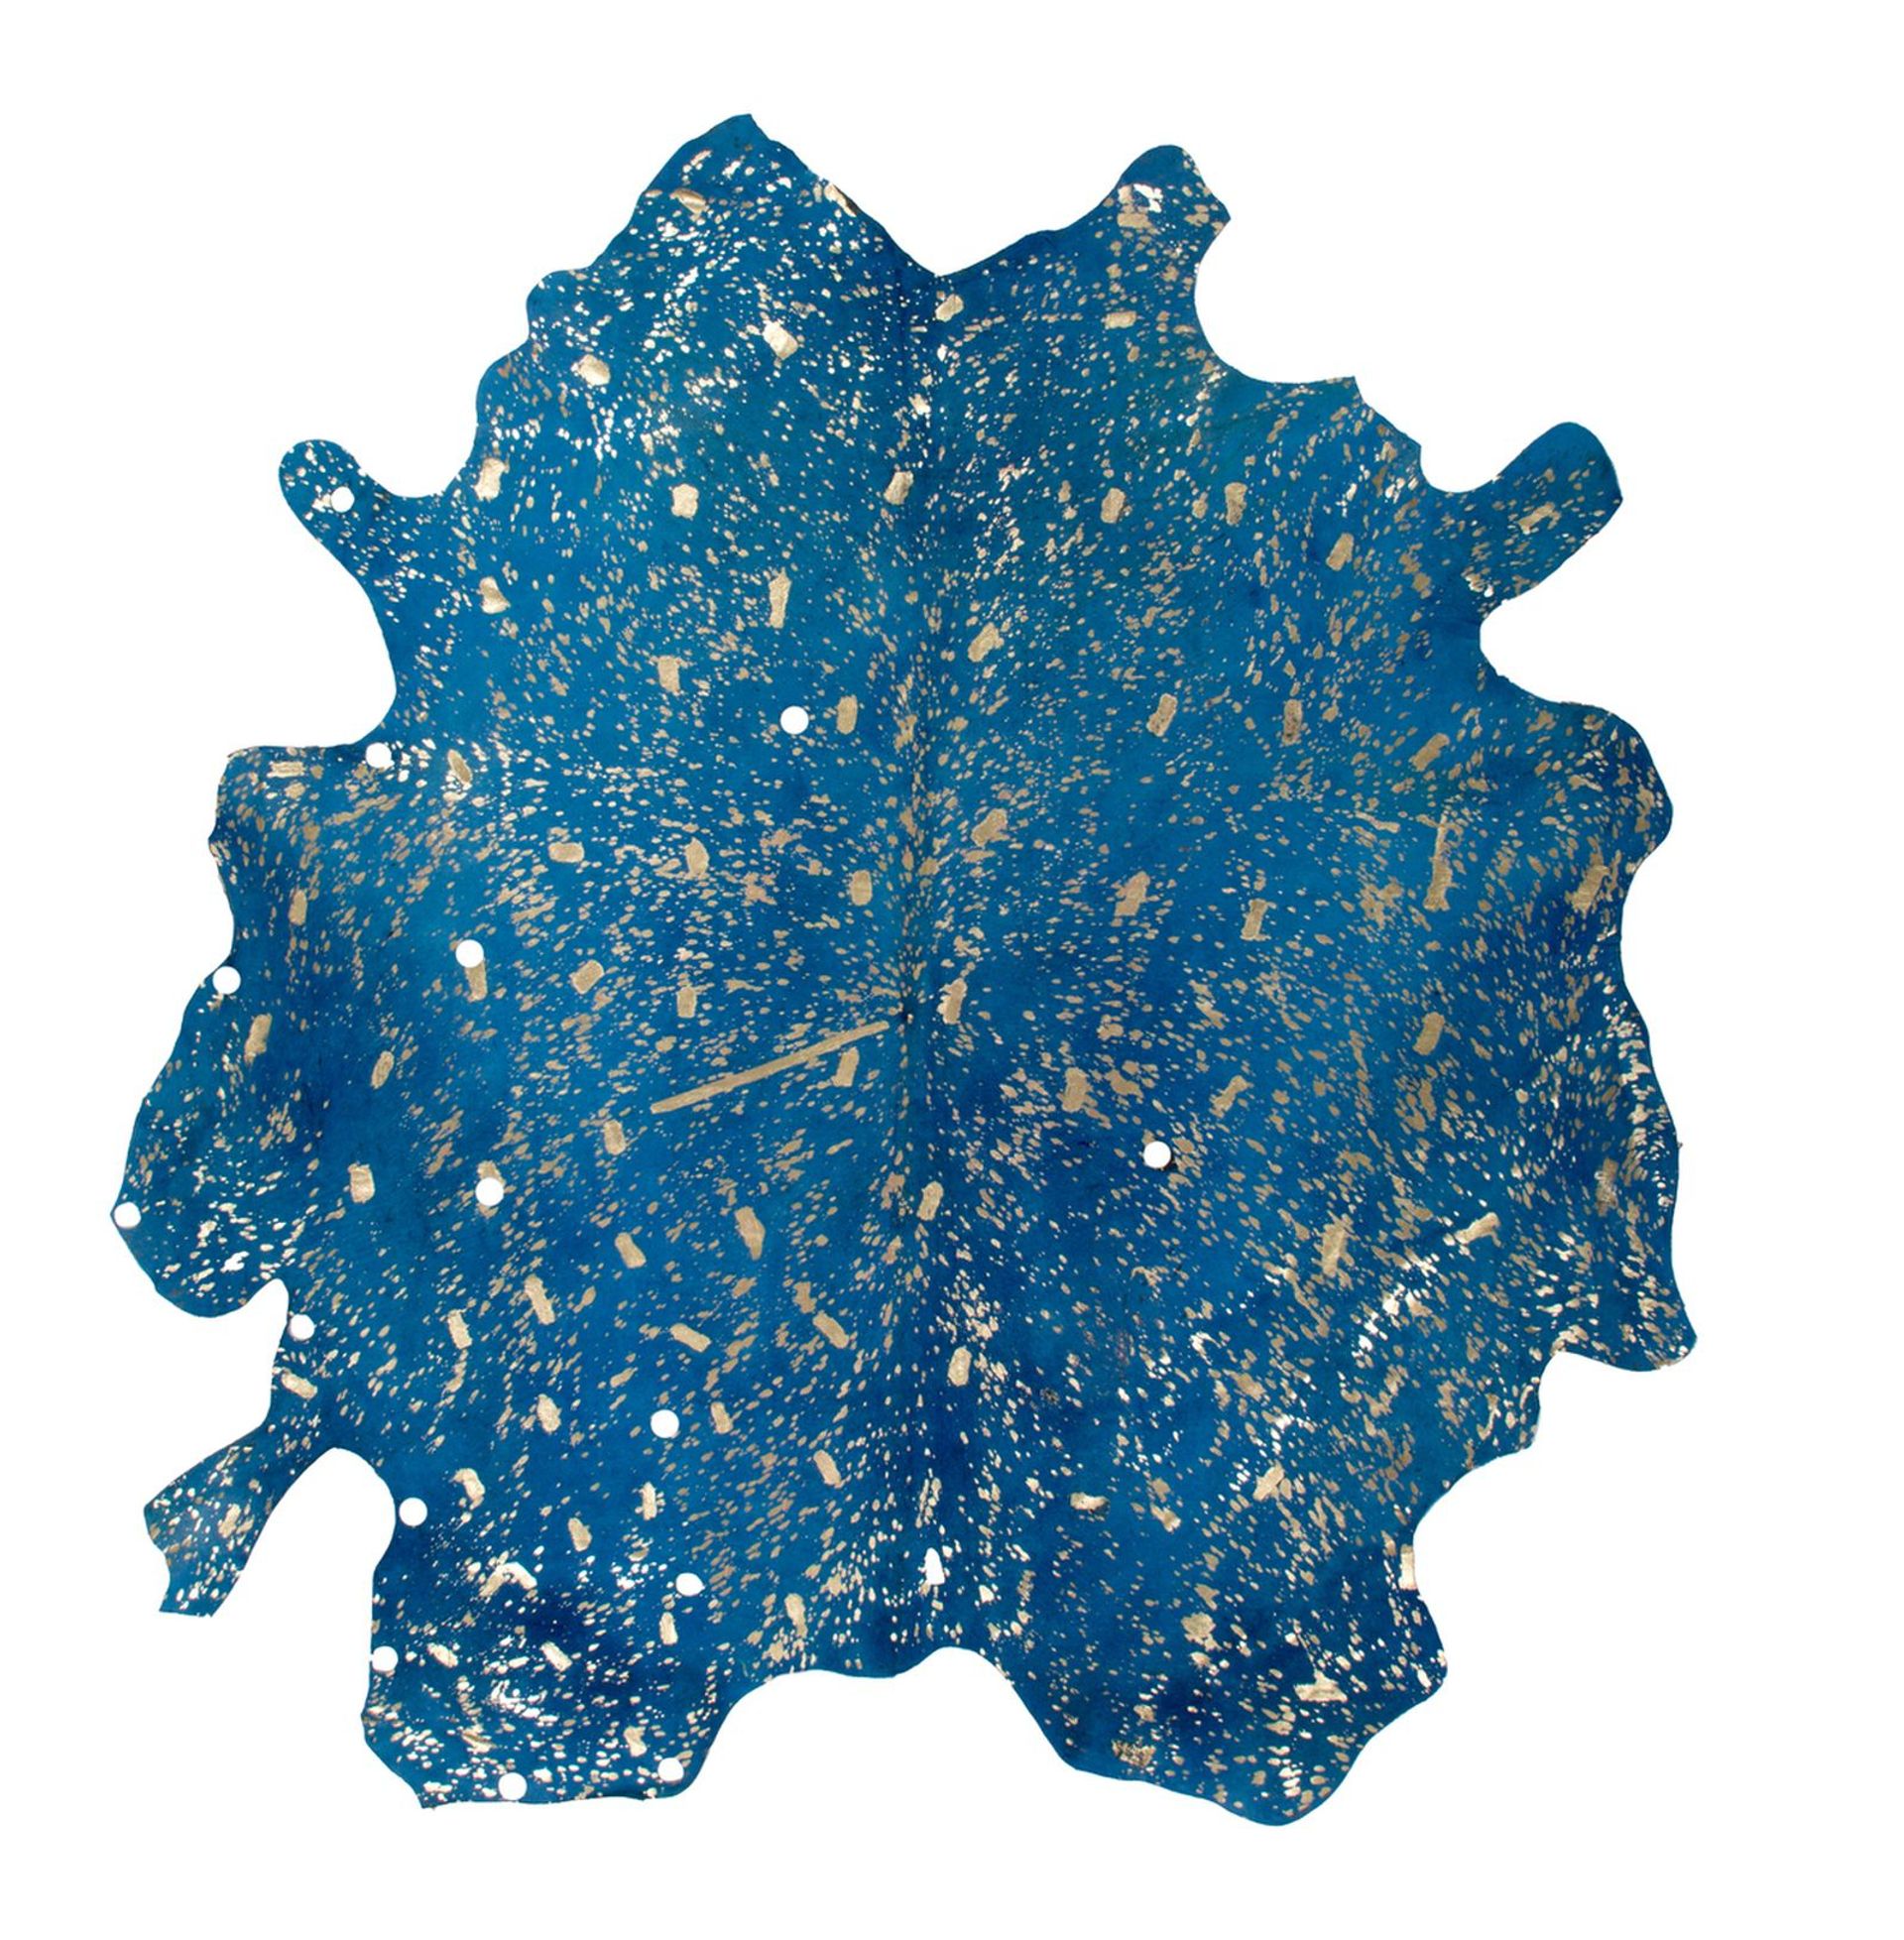 Teppich Glam 410 Blau / Gold 2,00 qm - 2,60 qm